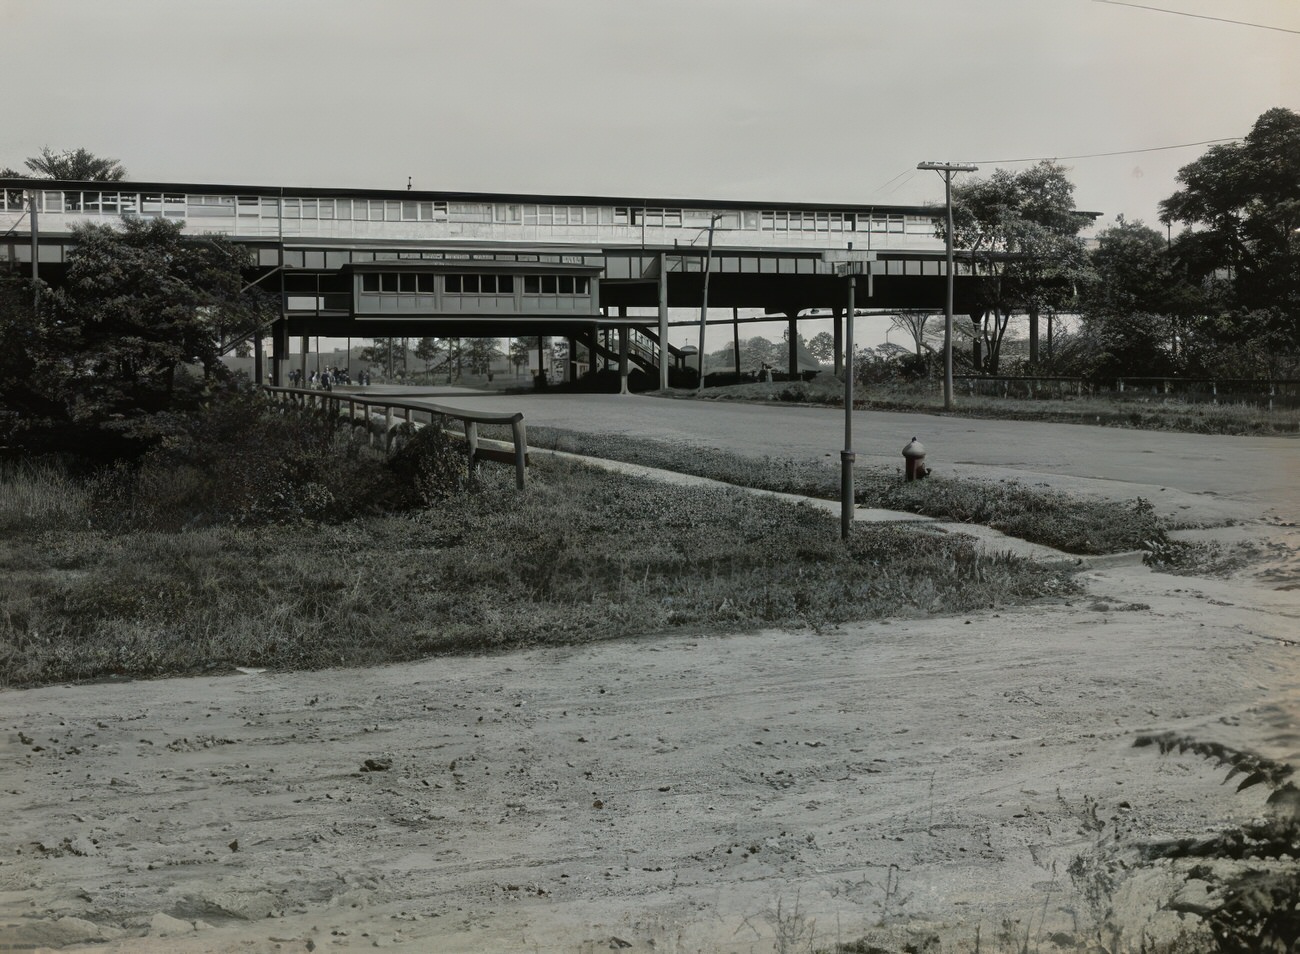 The Train Station At Allerton Ave. And Olinville Ave. In Williamsbridge, Bronx, Circa 1915.